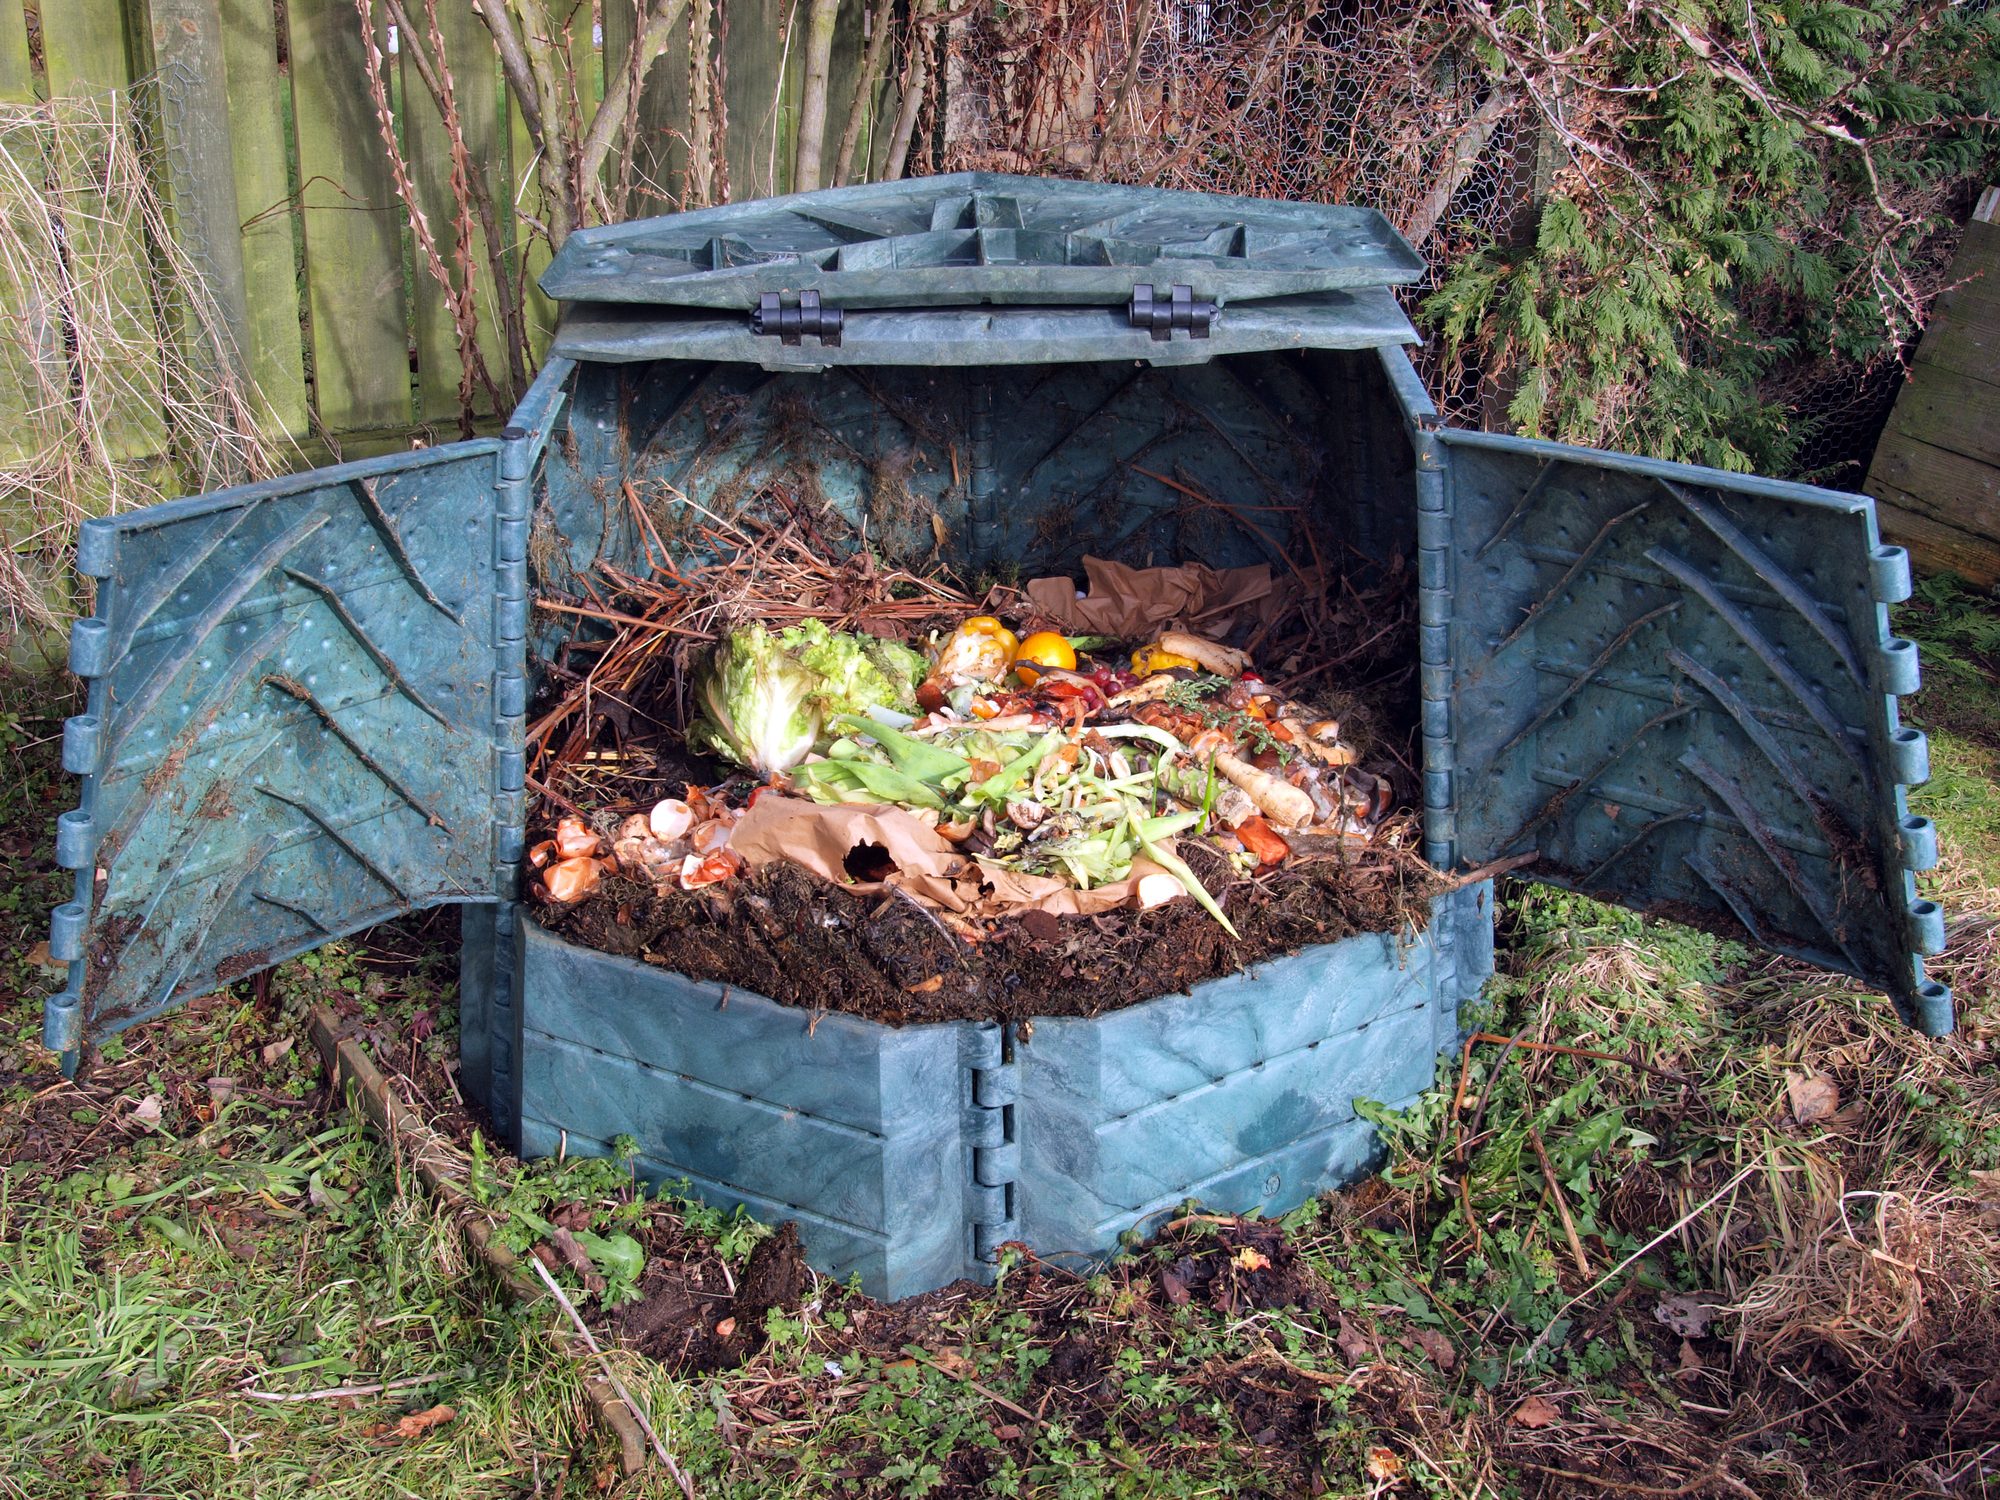 Garden Compost Bin